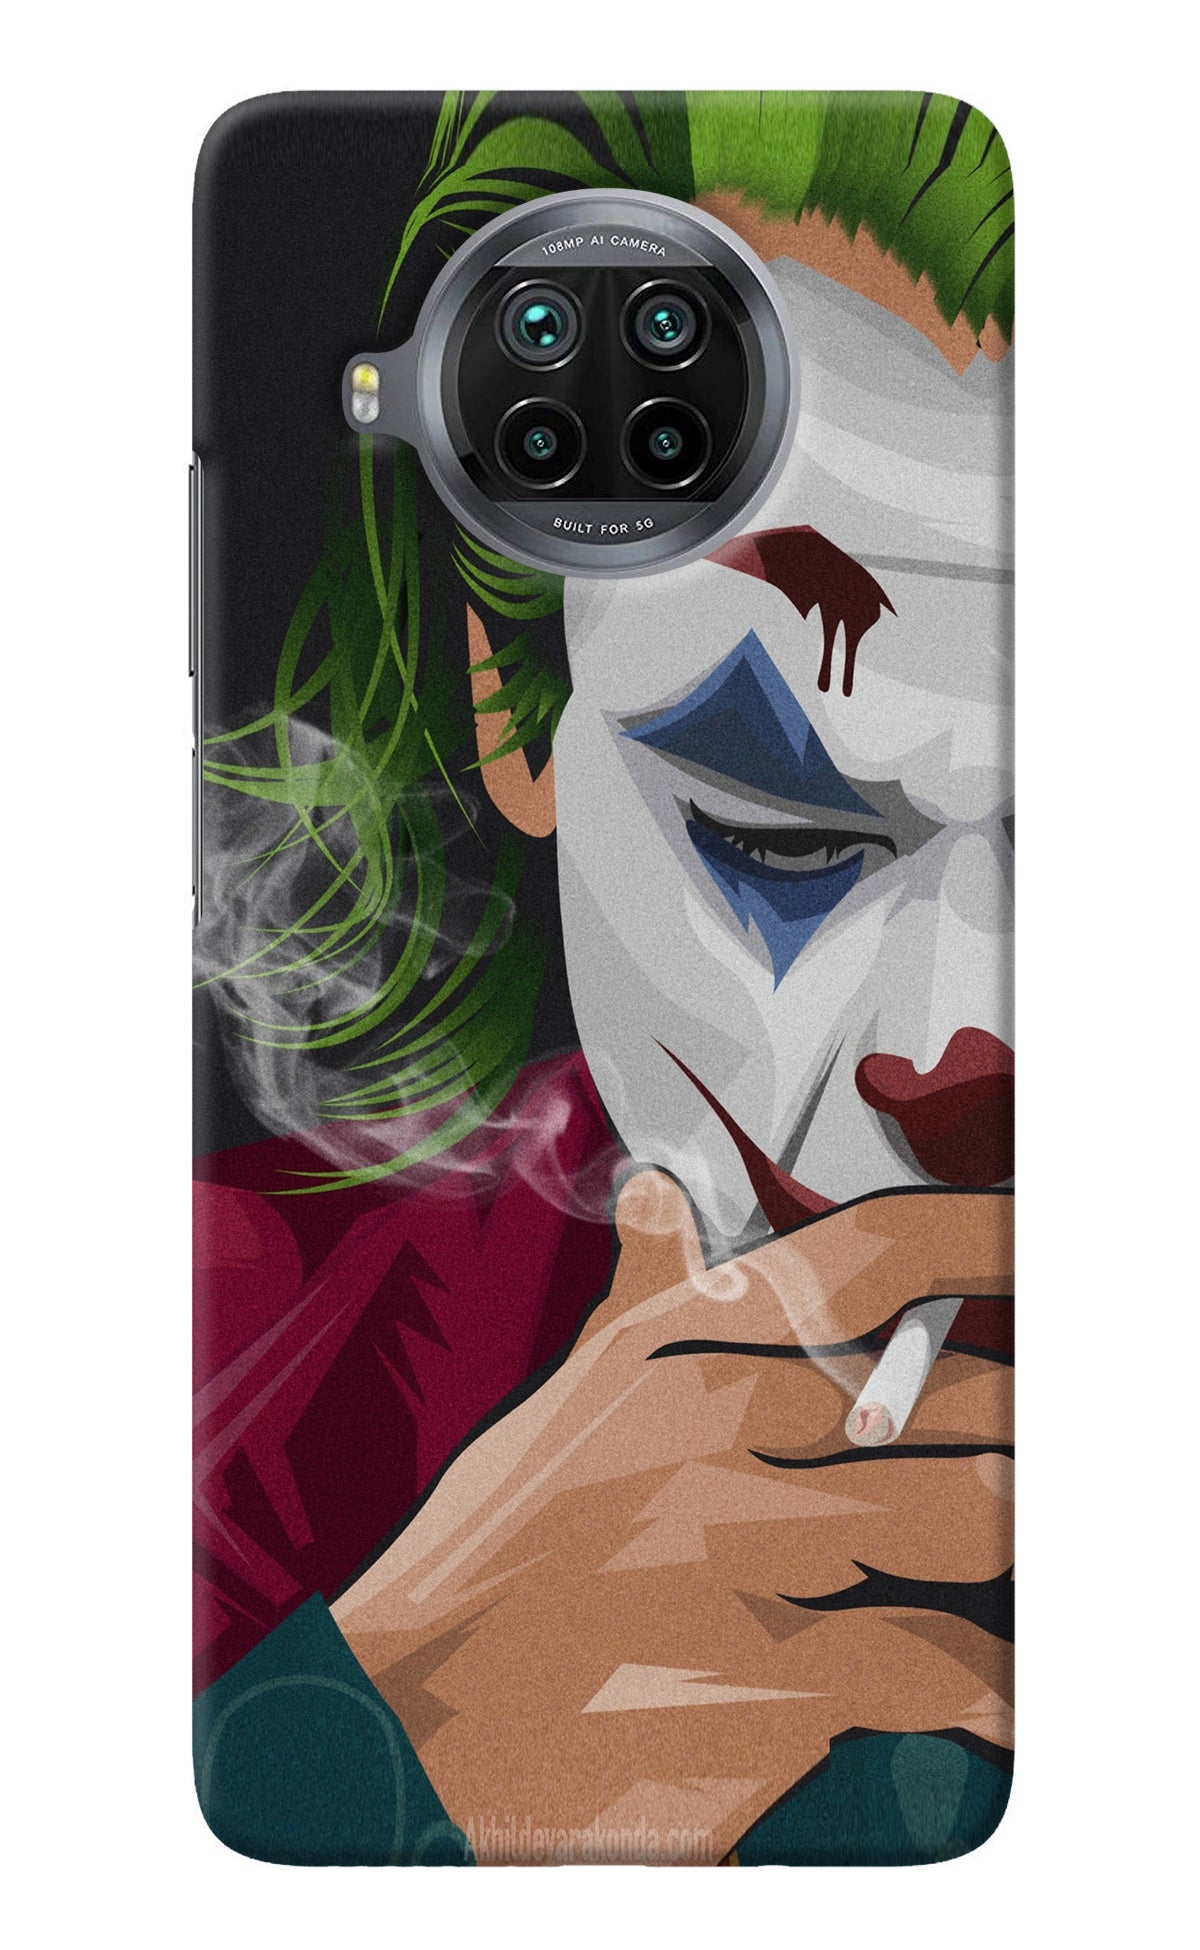 Joker Smoking Mi 10i Back Cover